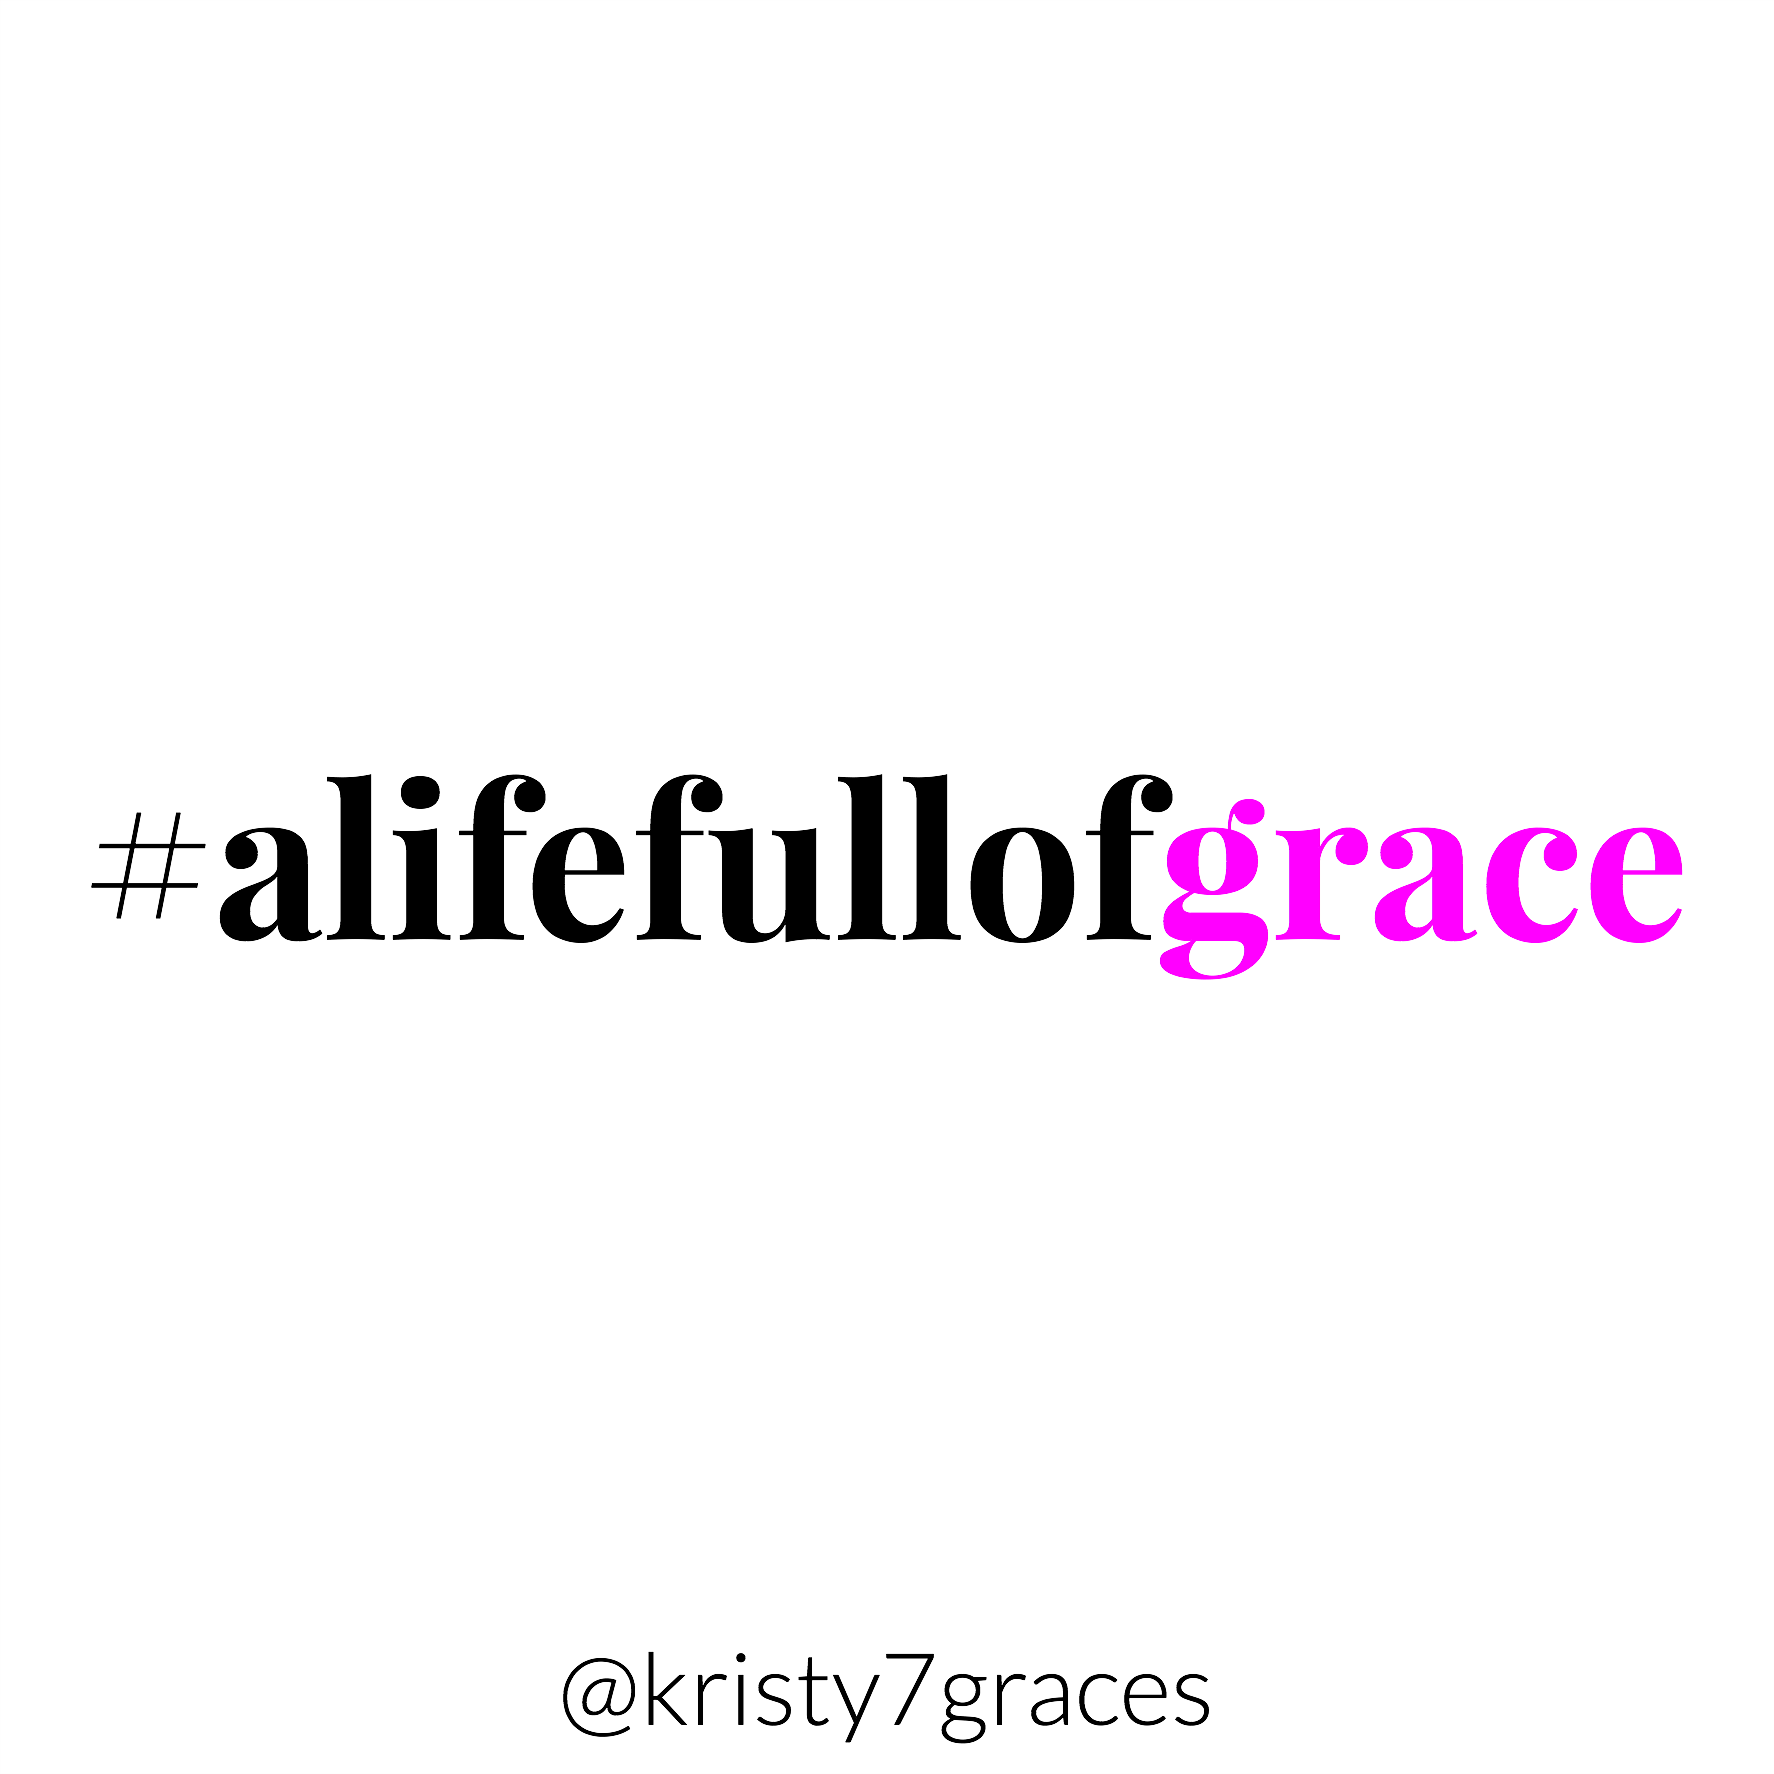 hashtag-alifefullofgrace